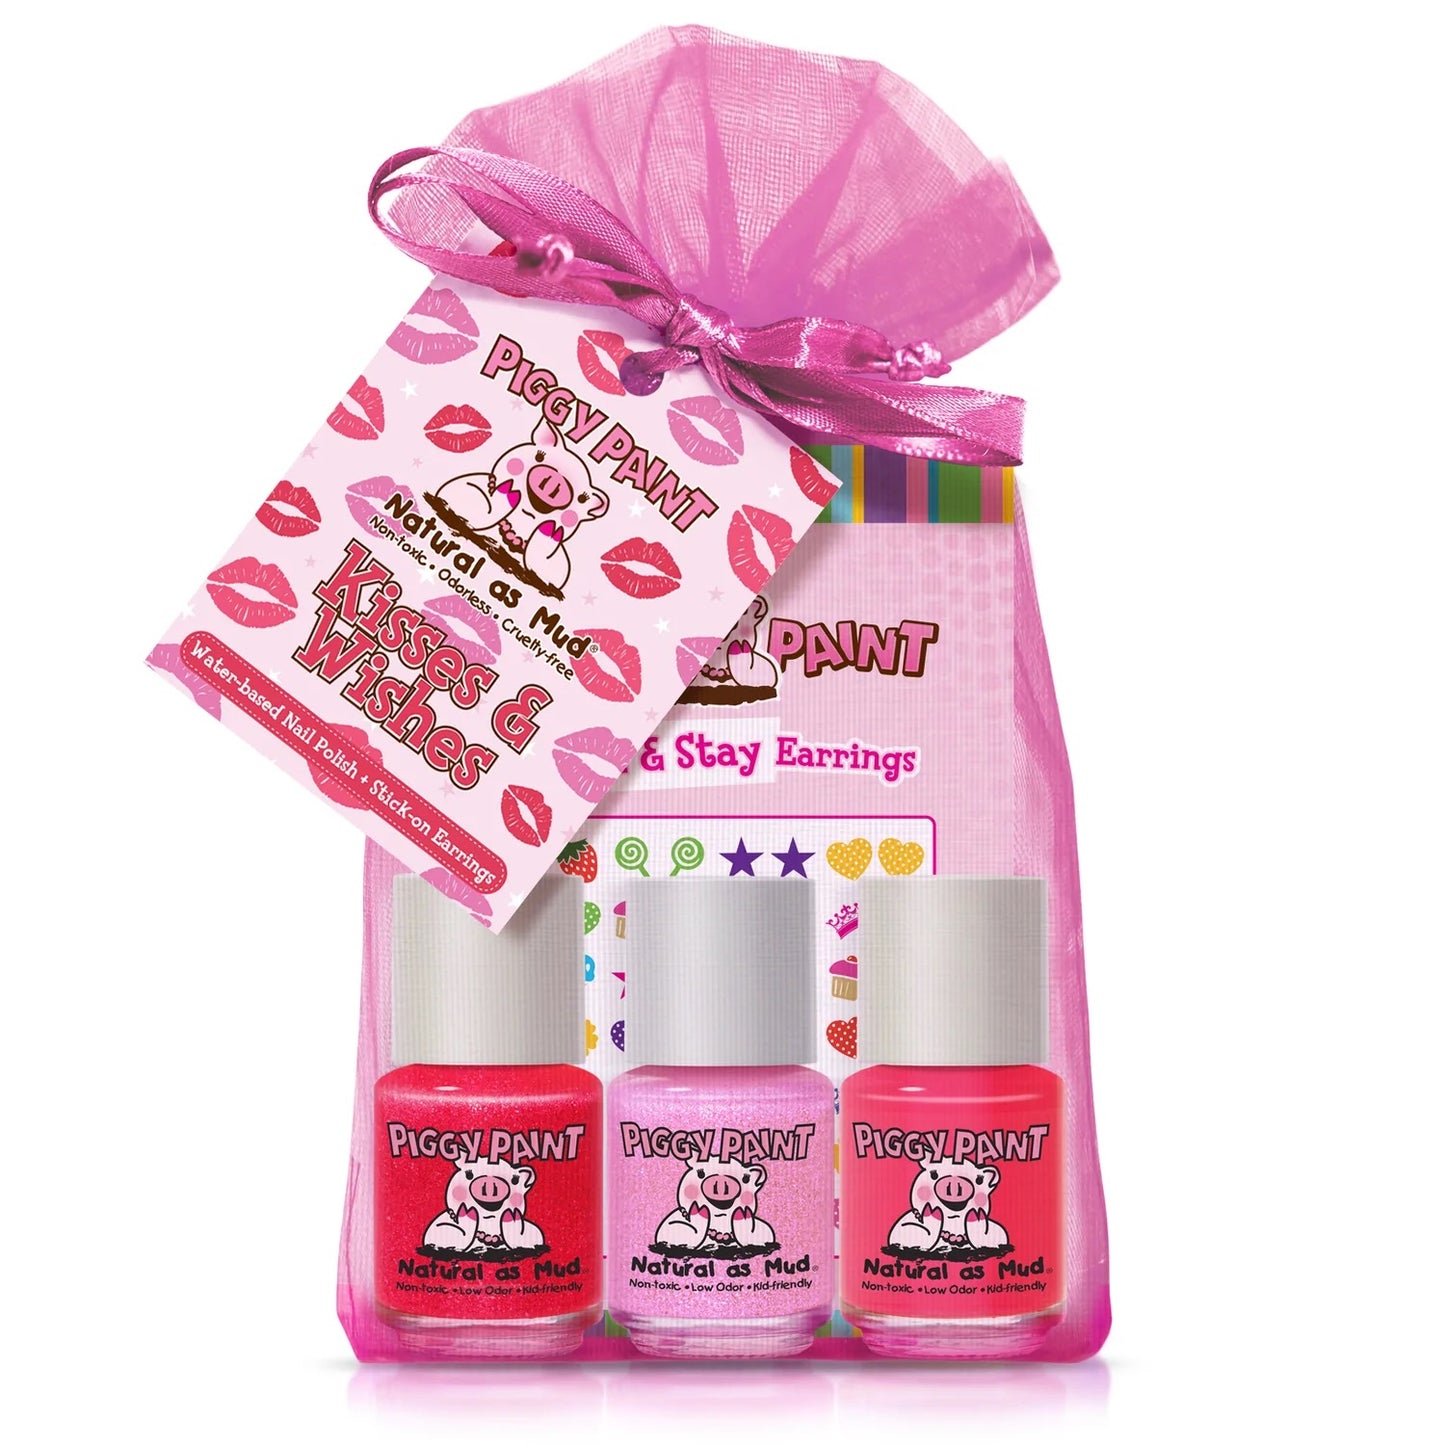 Piggy Paint Nail Polish Gift Sets